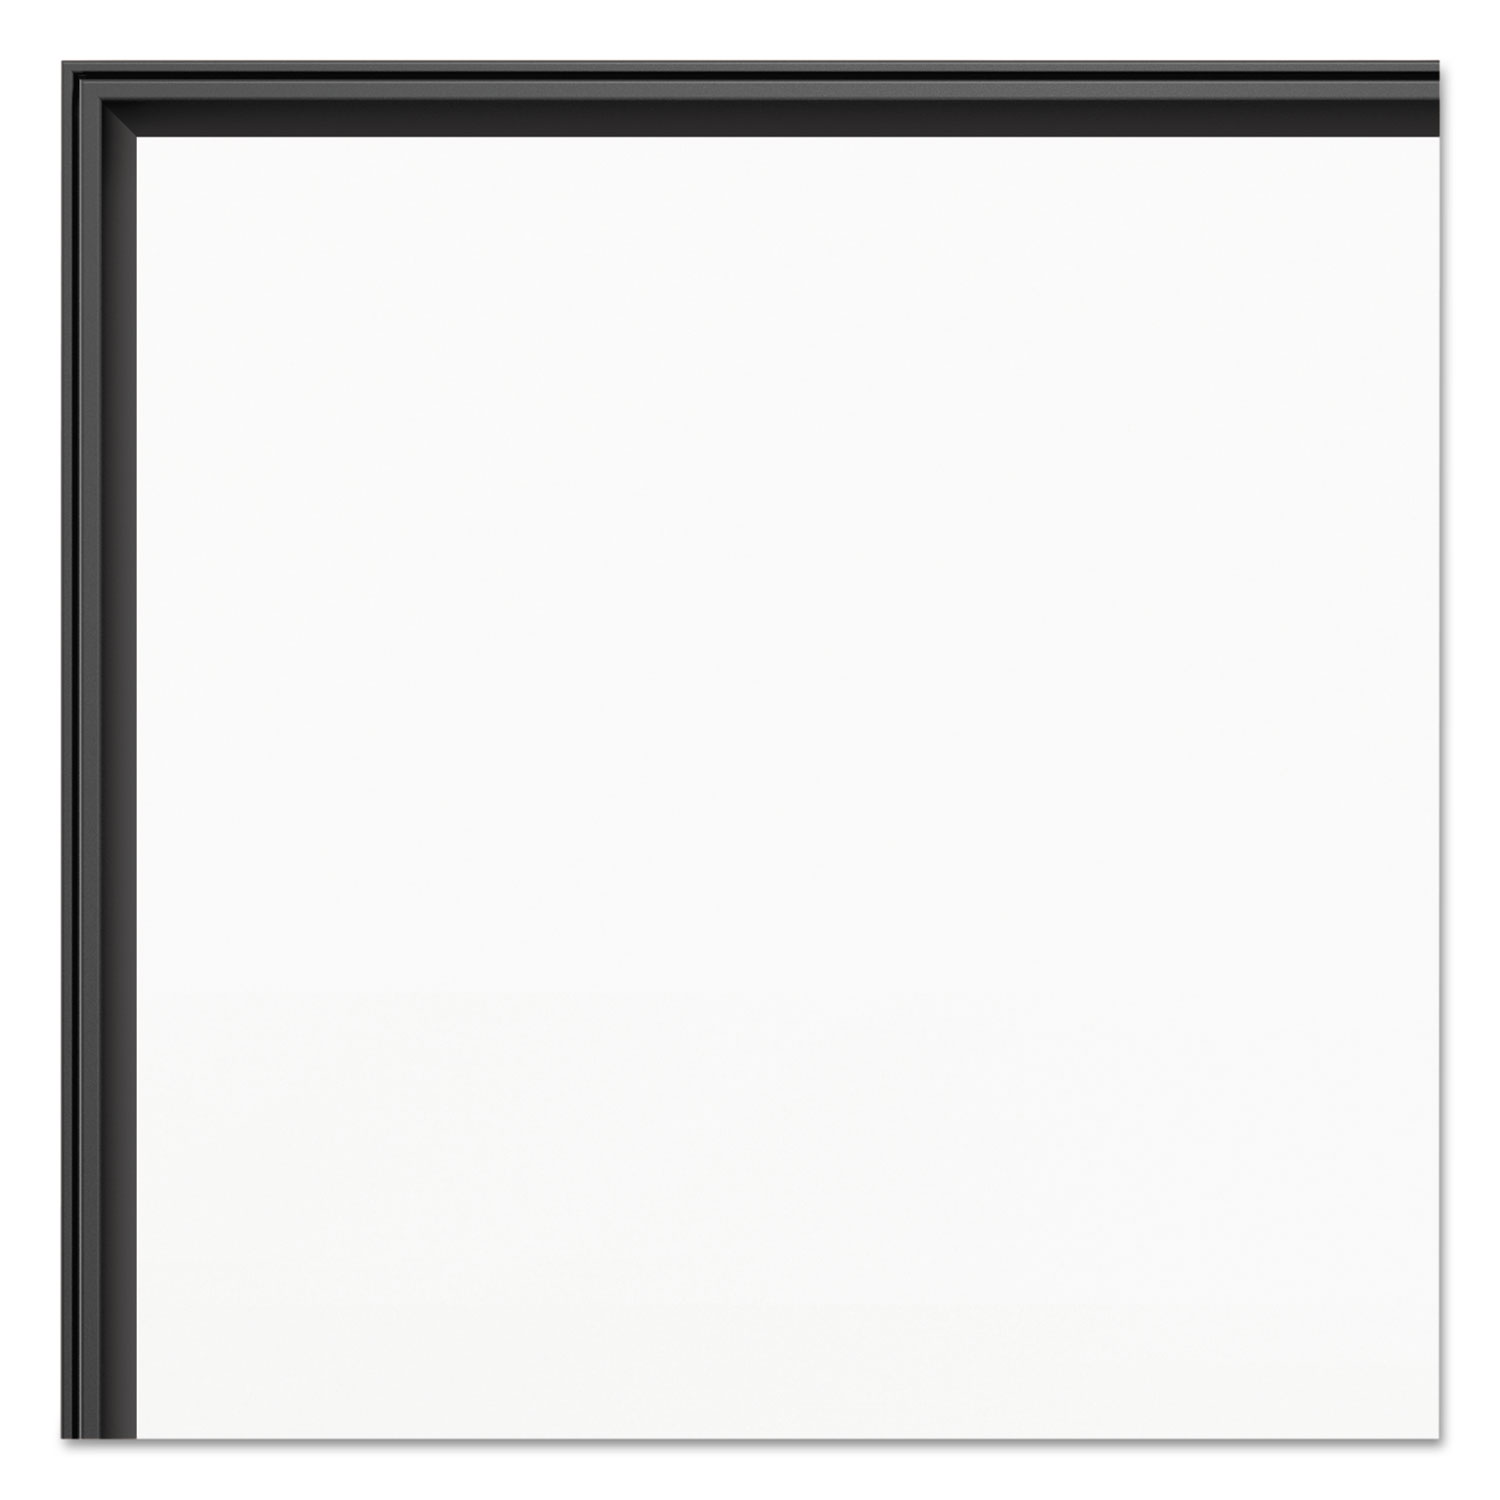 Fusion Nano-Clean Magnetic Whiteboard, 72 x 48, Black Frame